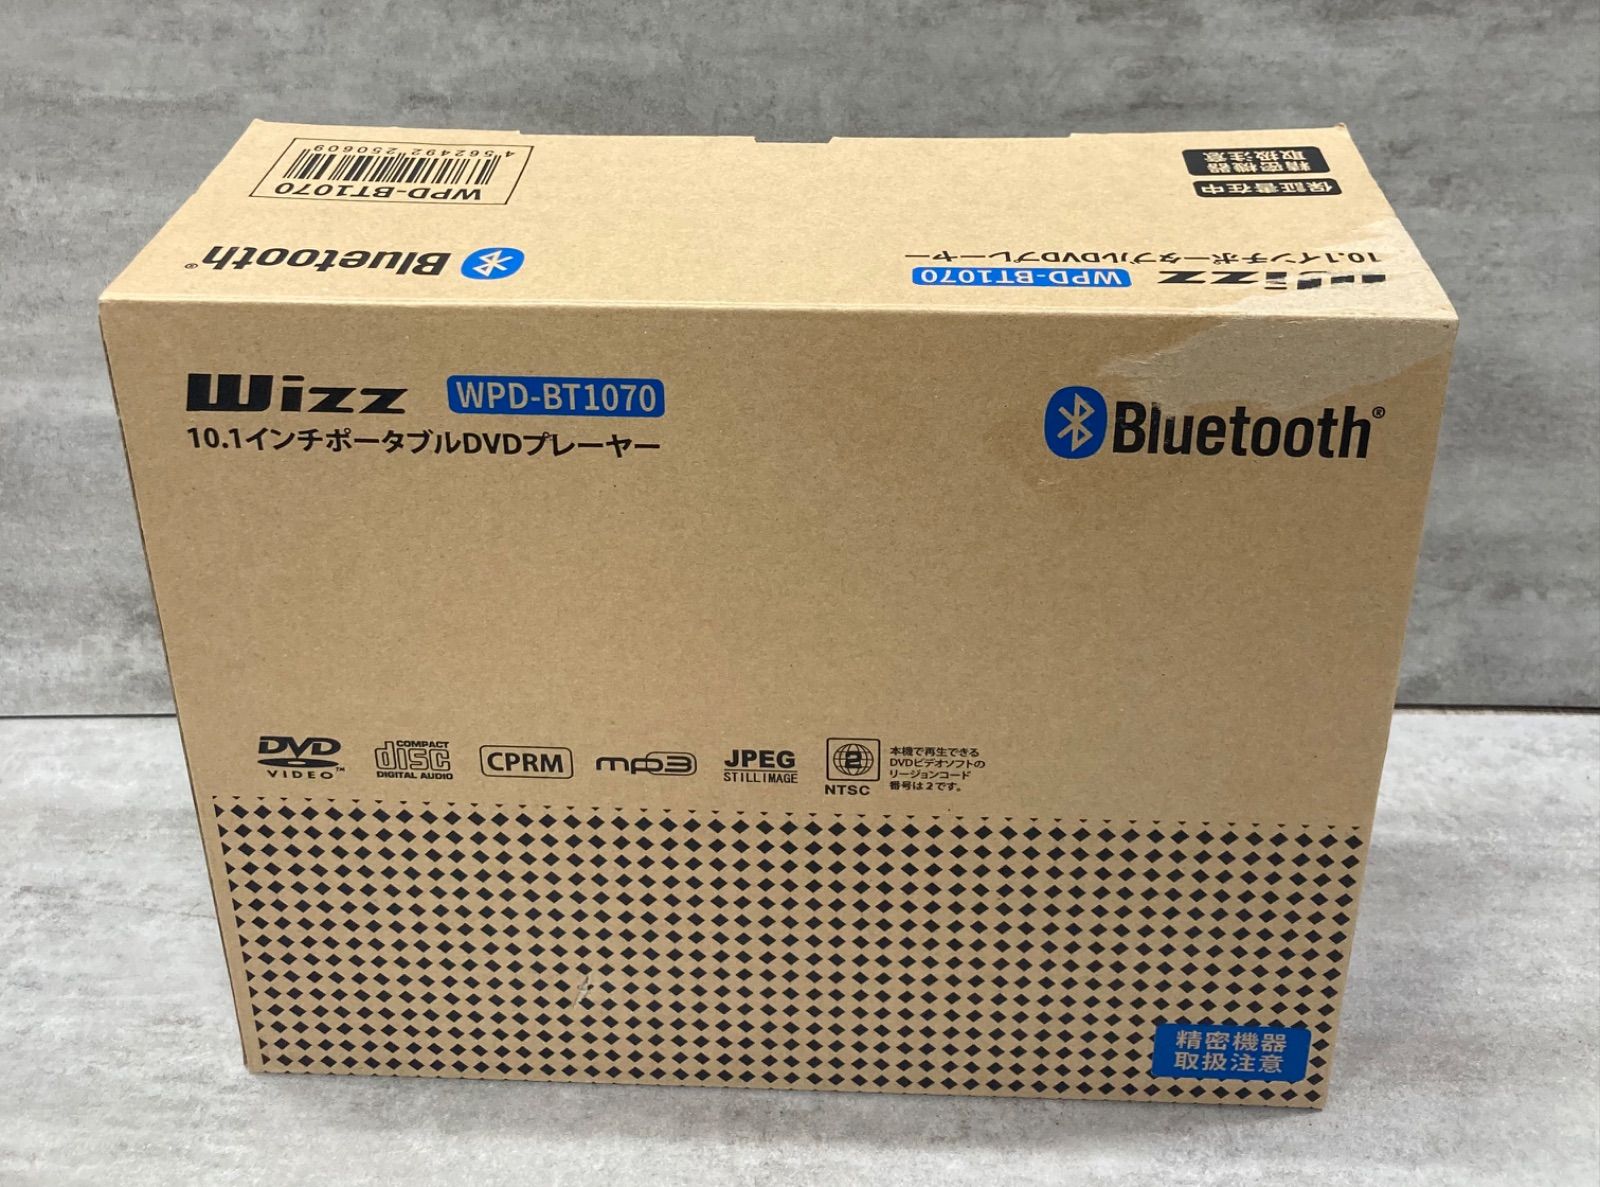 wizz 10.1インチポータブルDVDプレーヤー WPD-BT1070 Bluetooth | agb.md